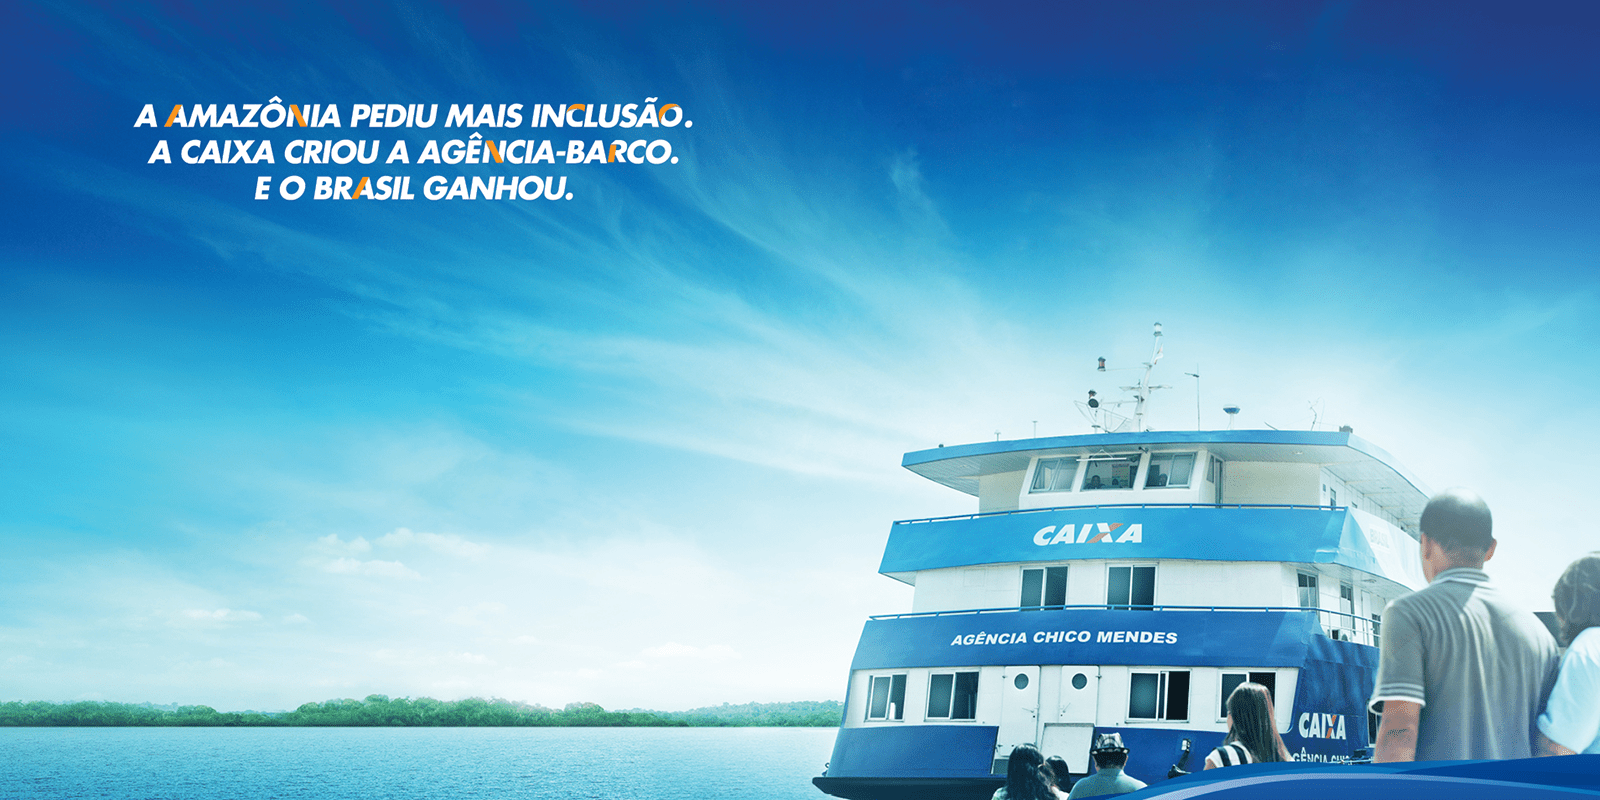 Featured image for “Premiada agência-barco da CAIXA”